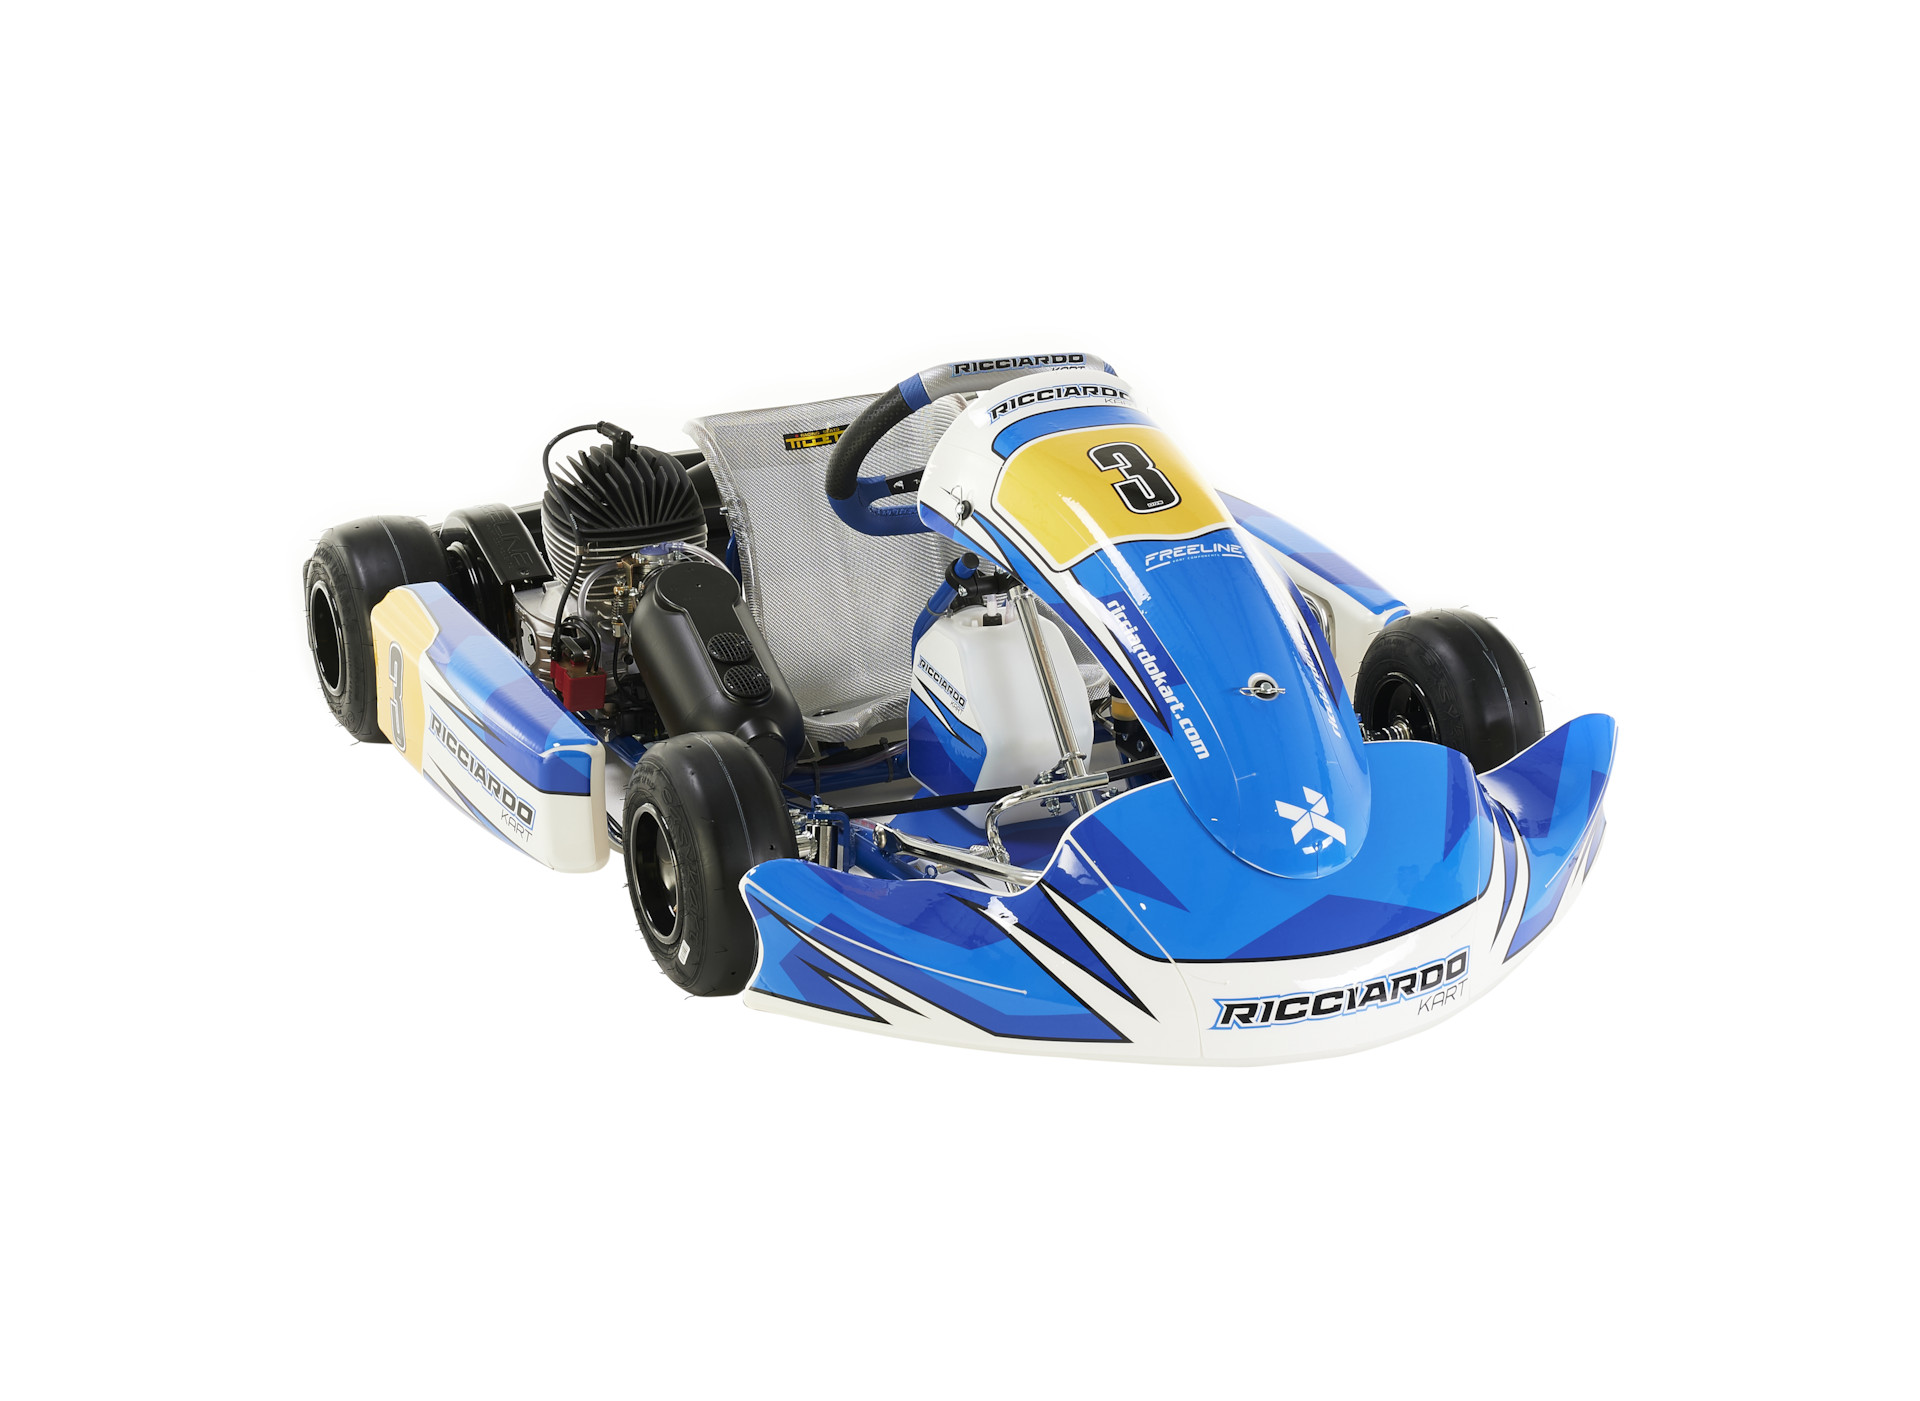 Daniel Ricciardo Series DRS-62 Kart